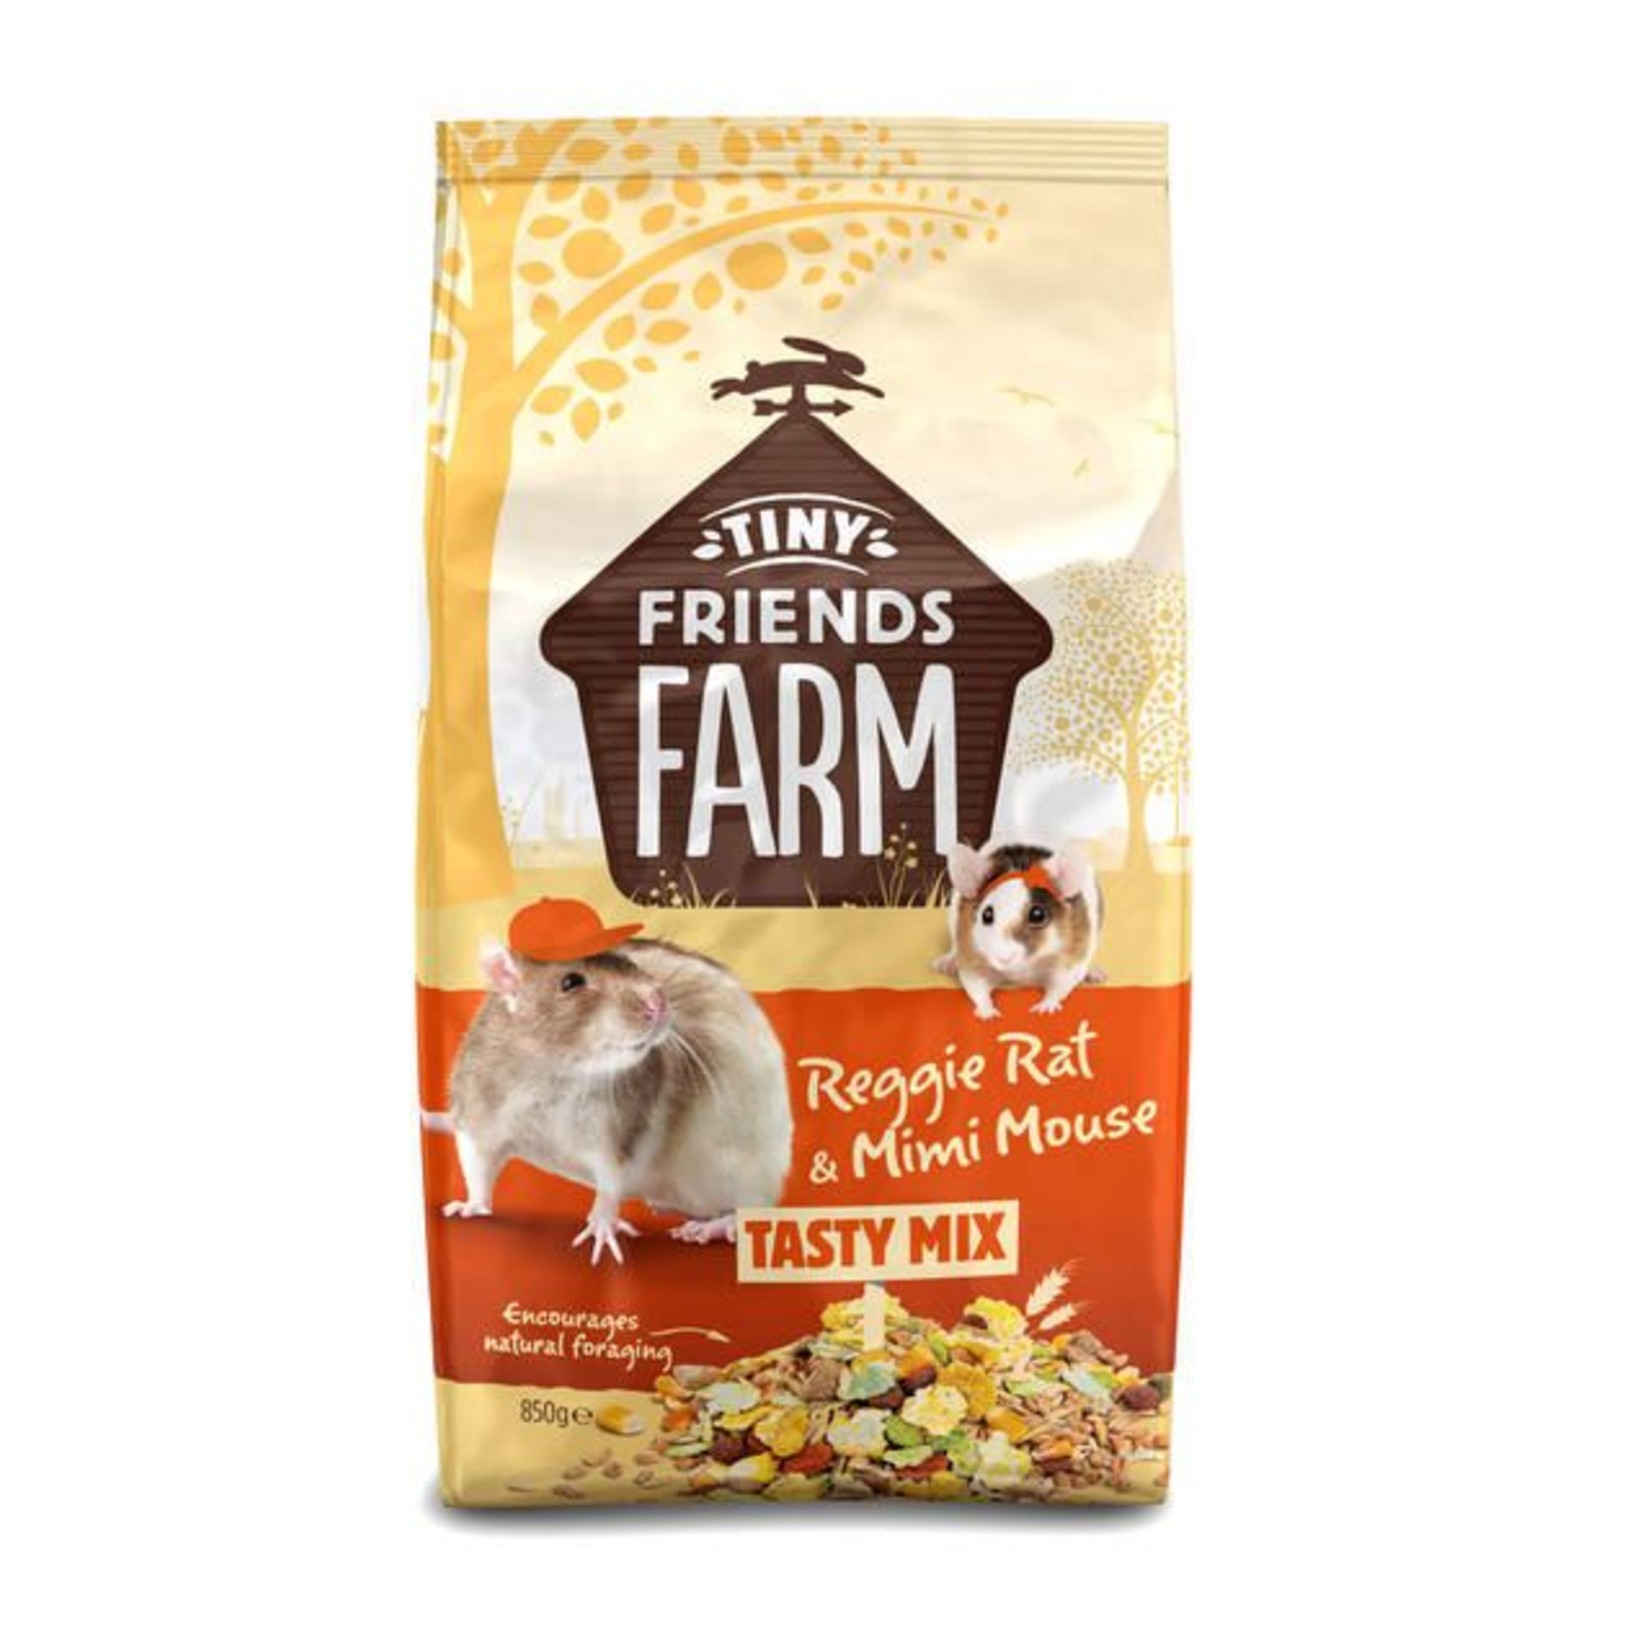 Supreme Tiny Friends Farm Reggie Rat & Mimi Mouse Tasty Mix Food, 850g